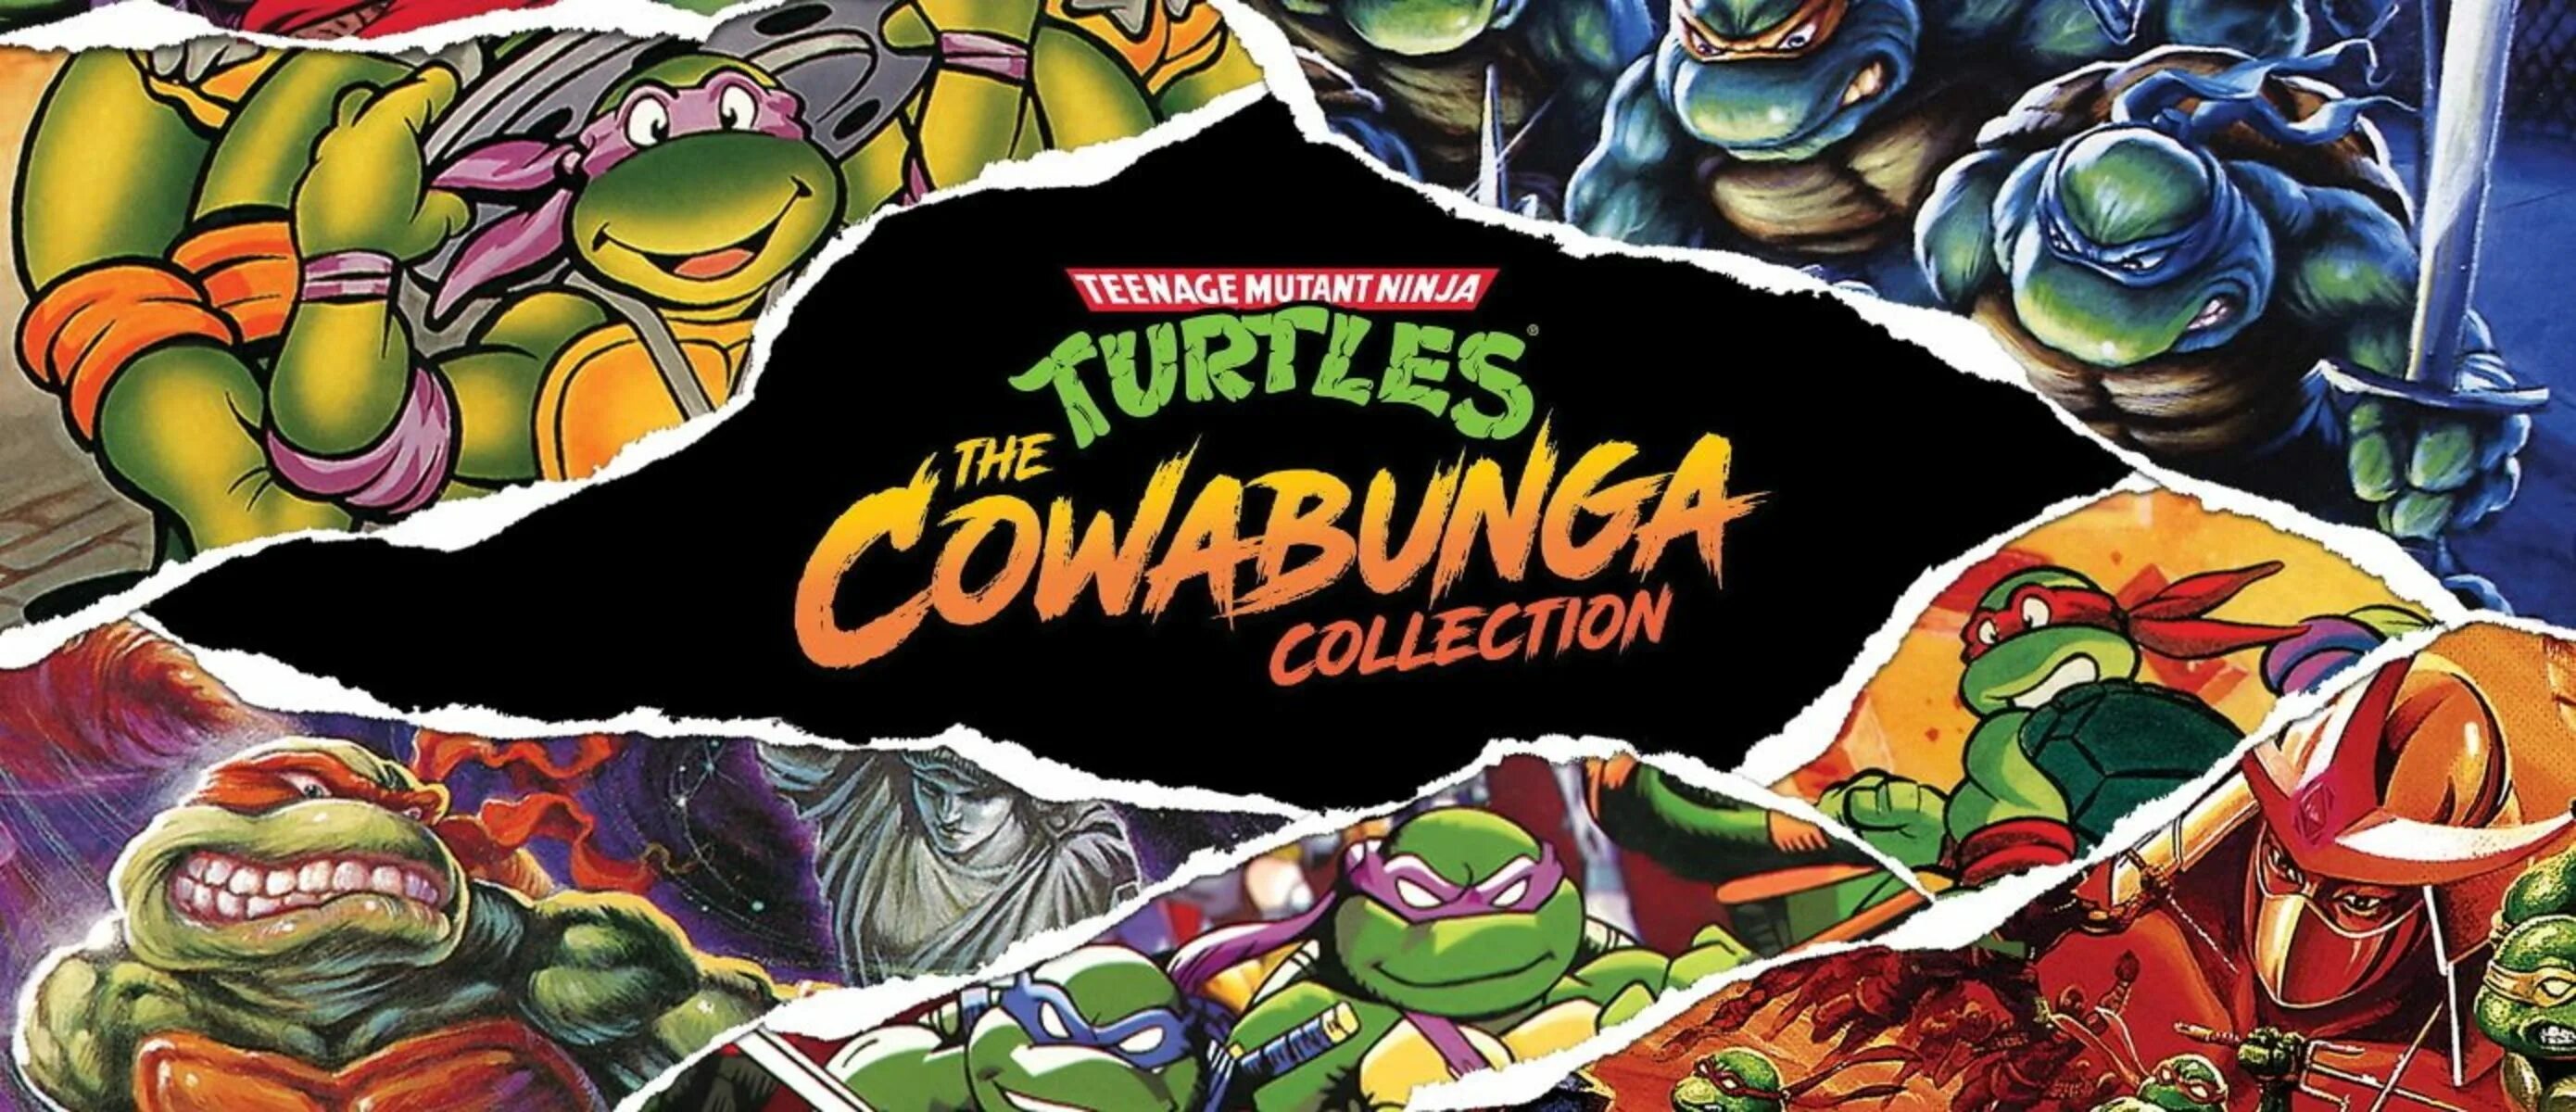 Teenage Mutant Ninja Turtles: the Cowabunga collection. Cowabunga Черепашки ниндзя. Черепашки ниндзя 2022. Черепашки ниндзя 5 черепашка.